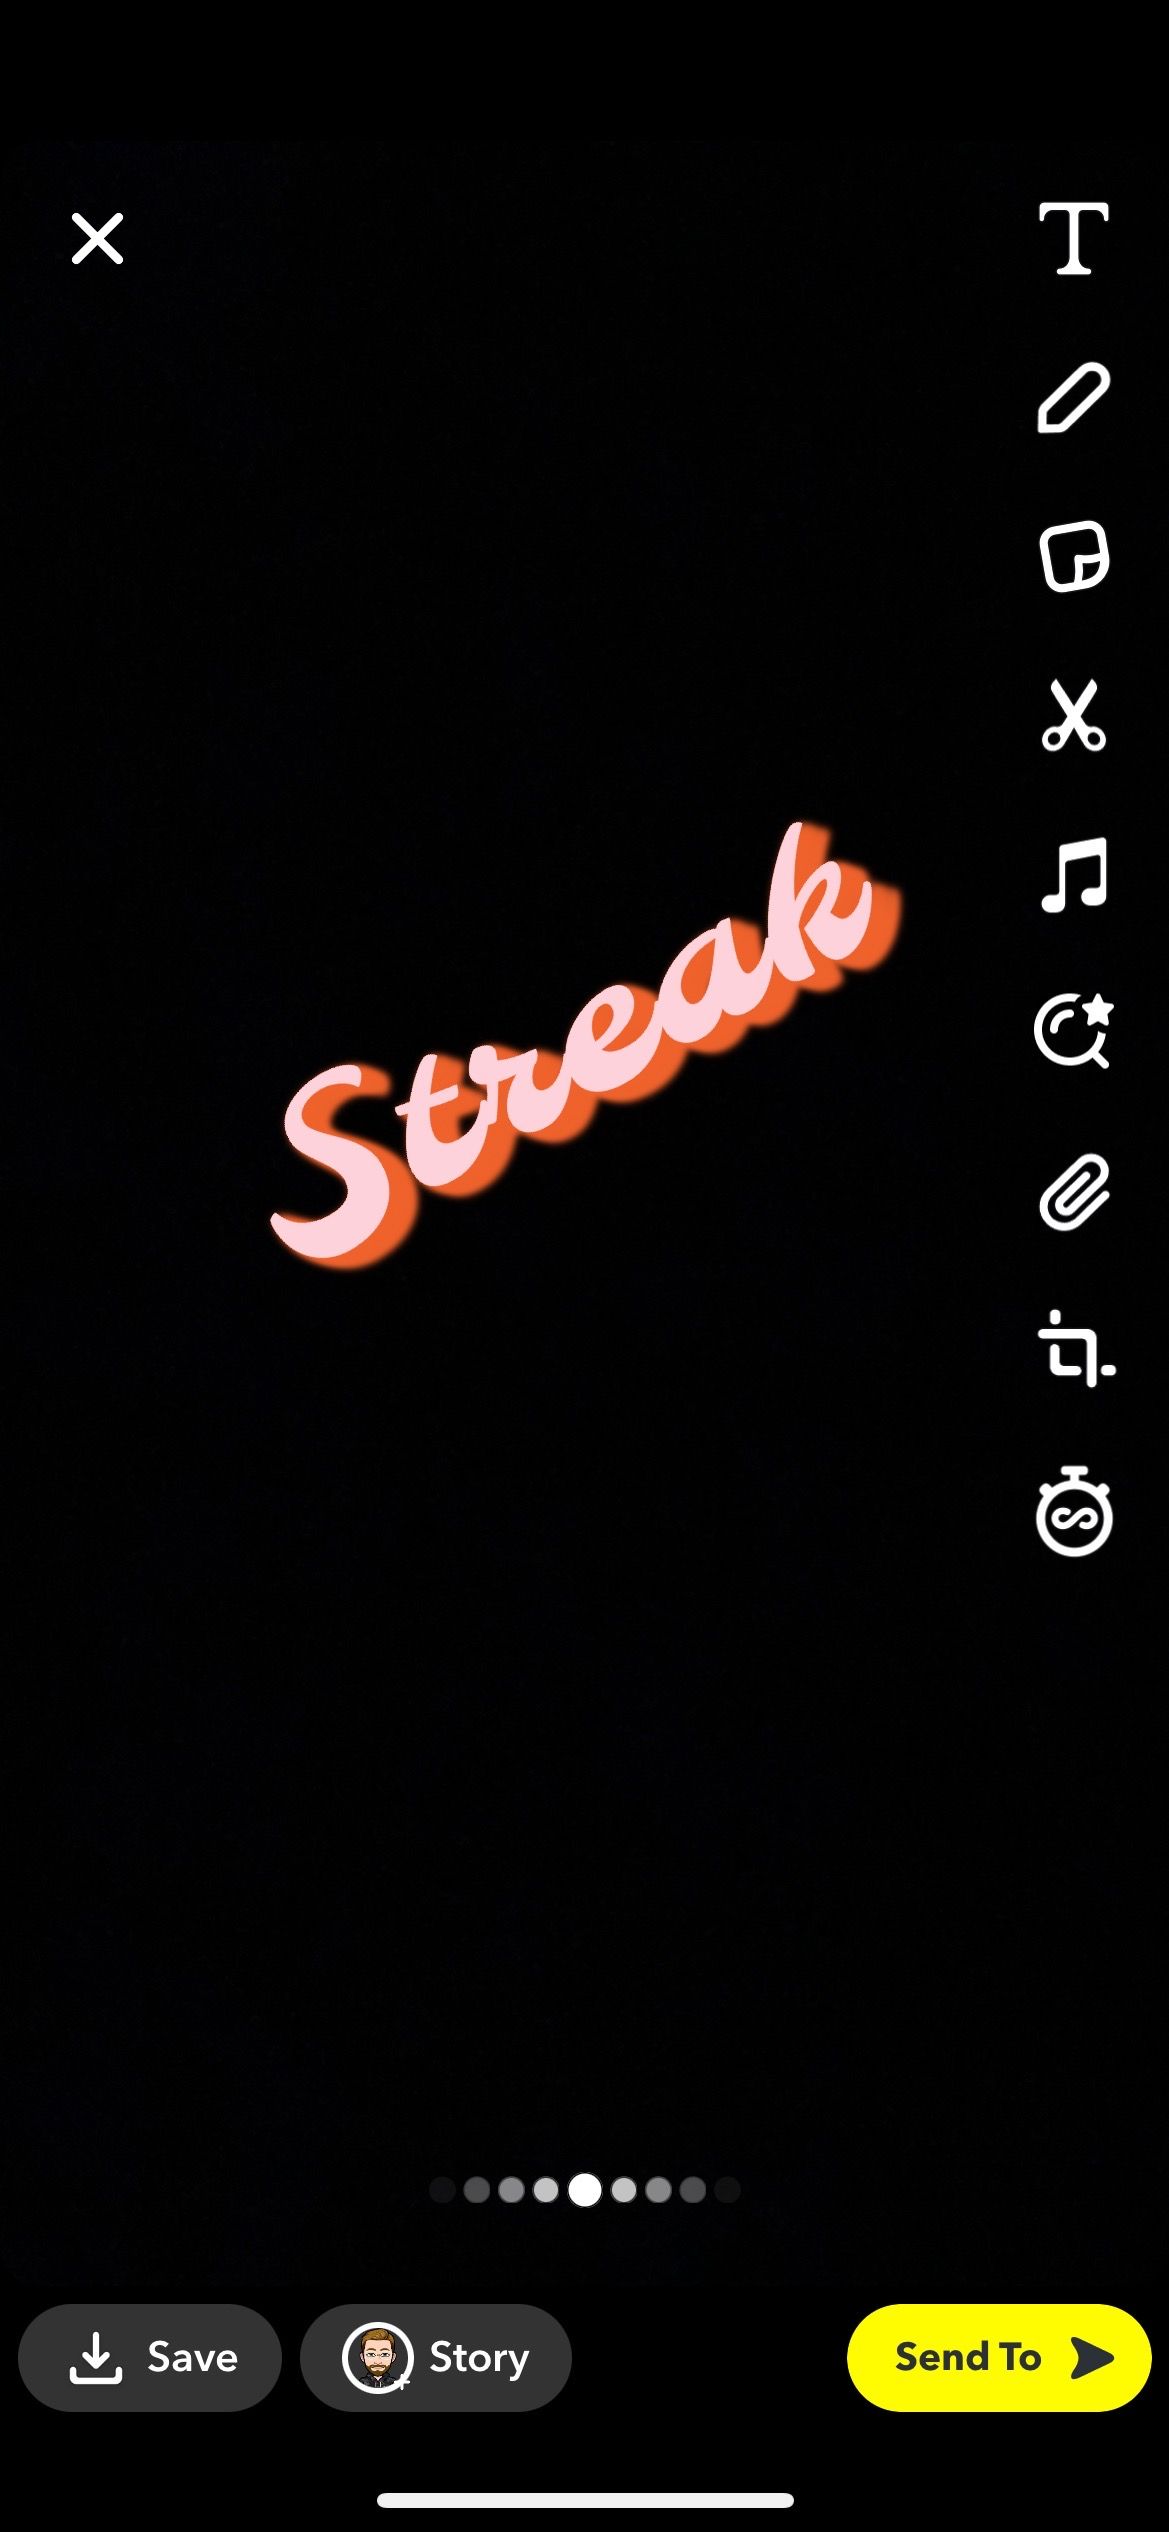 Making streaks on Snapchat